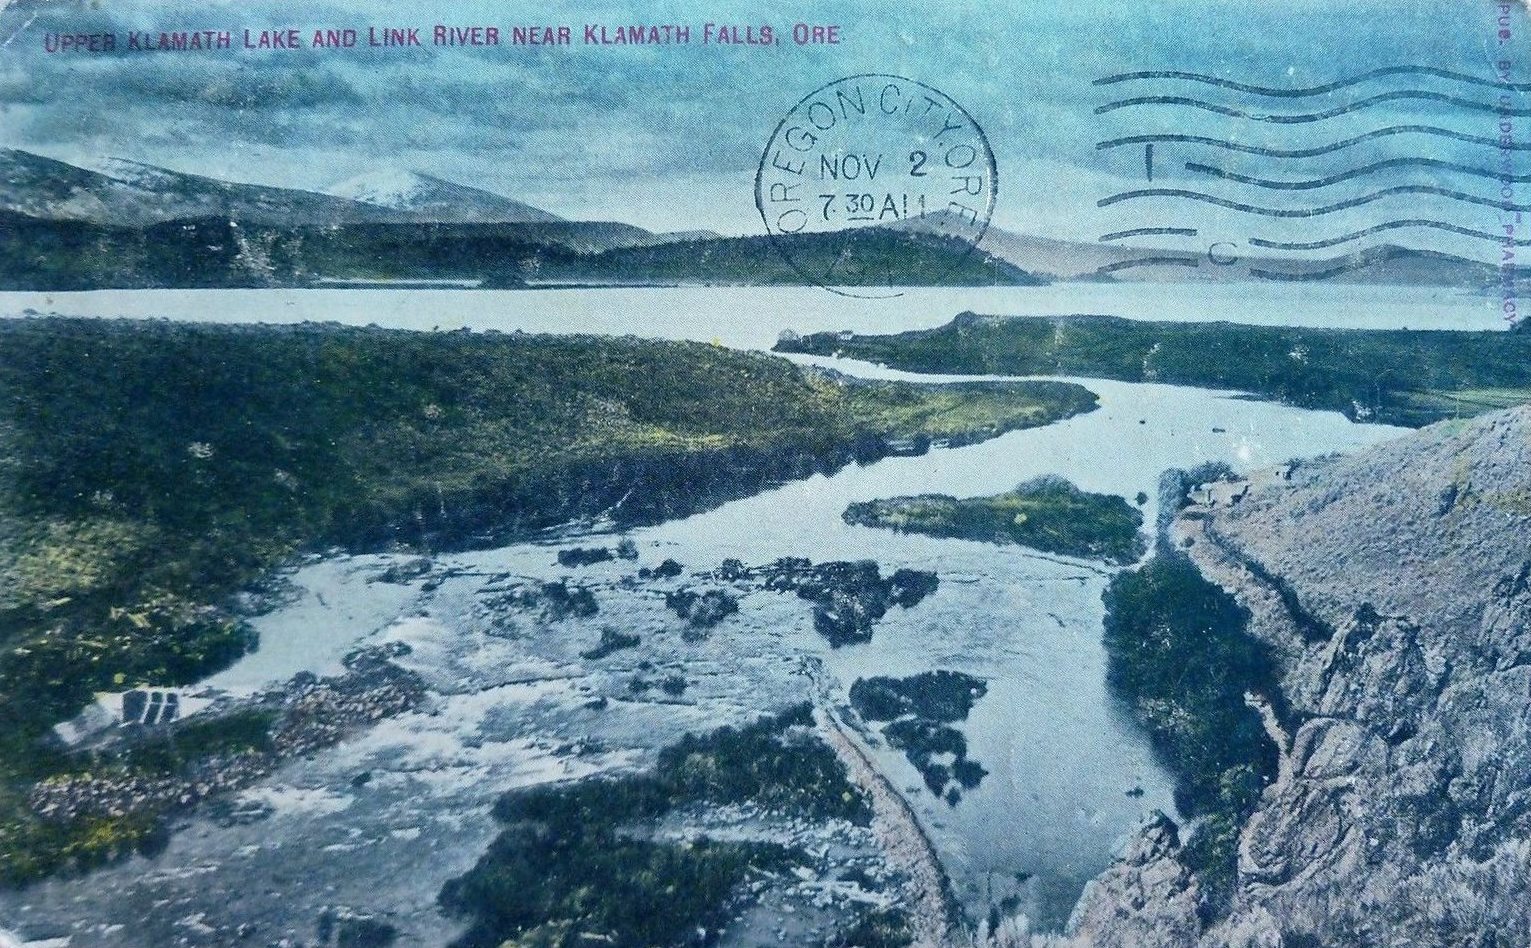 Link River and Klamath Lake postcard, postmarked November 1910